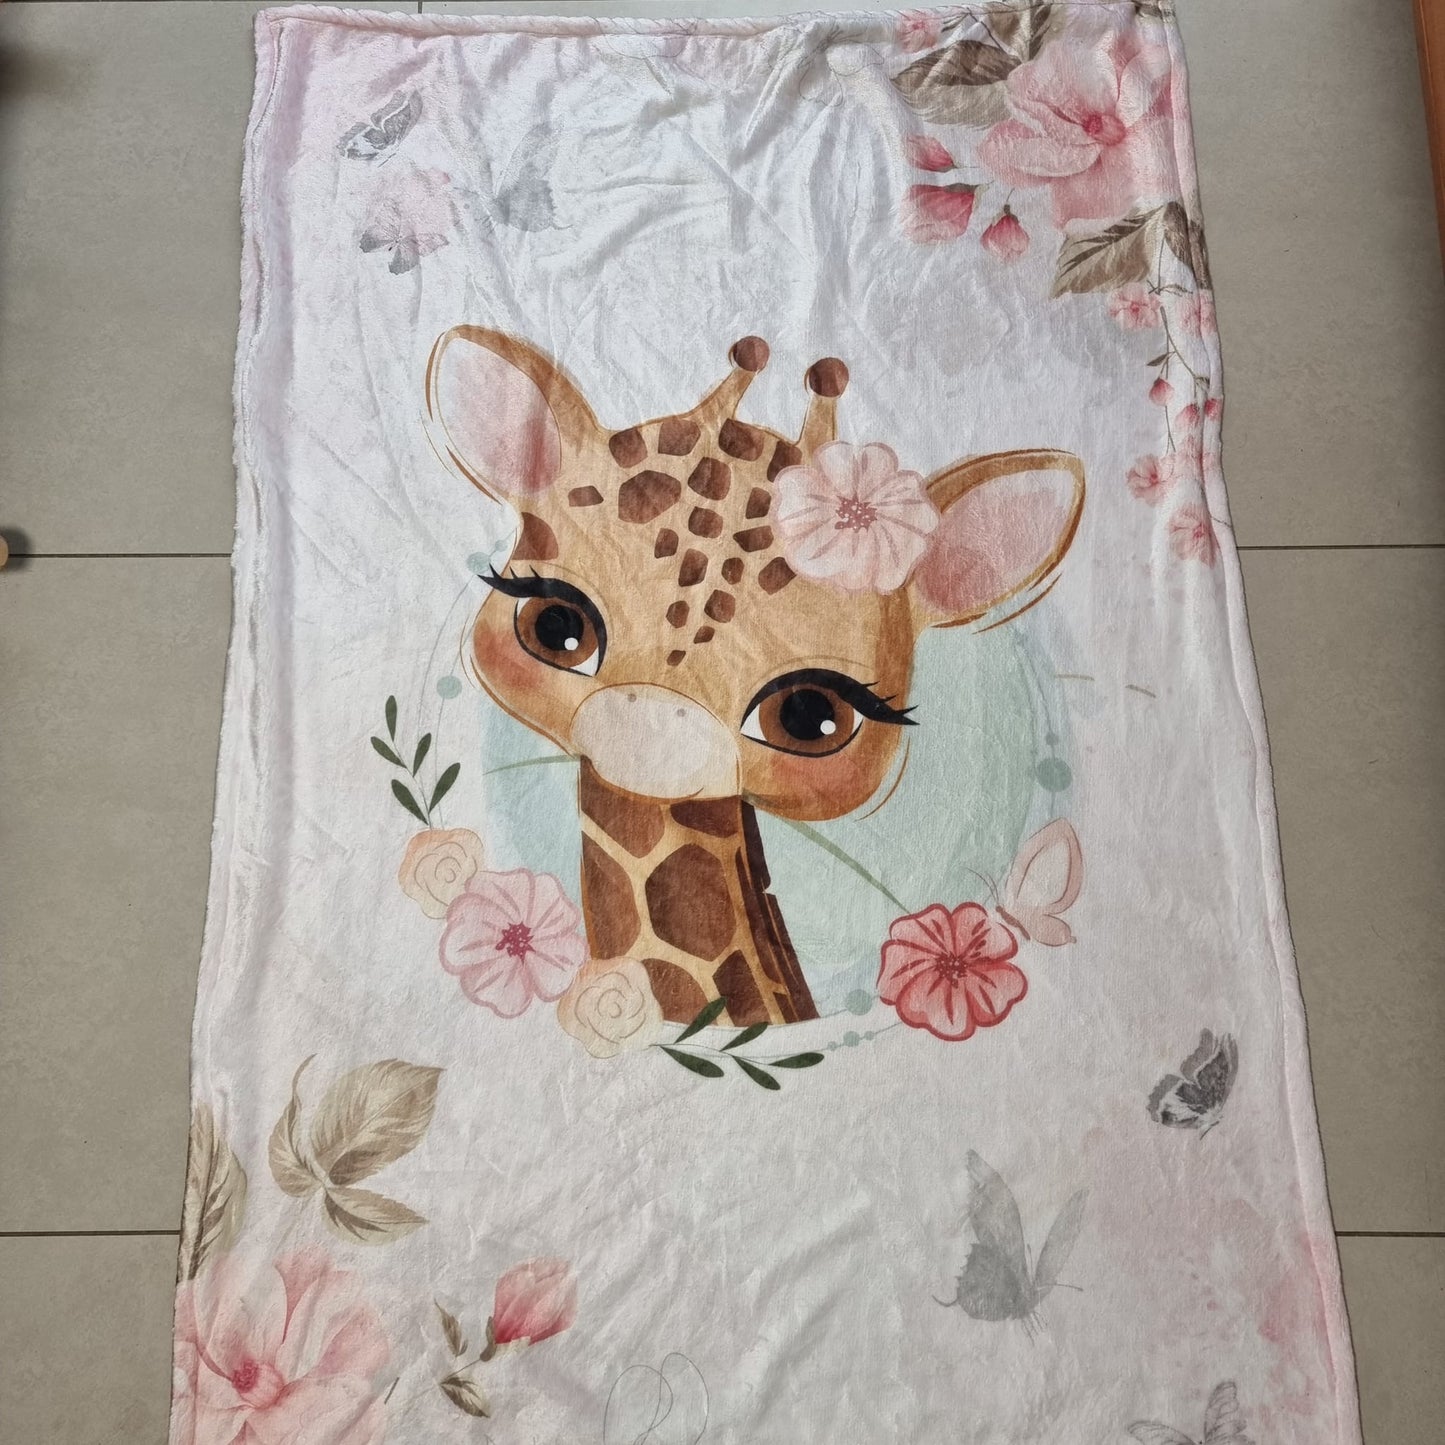 Rosy the Baby Giraffe